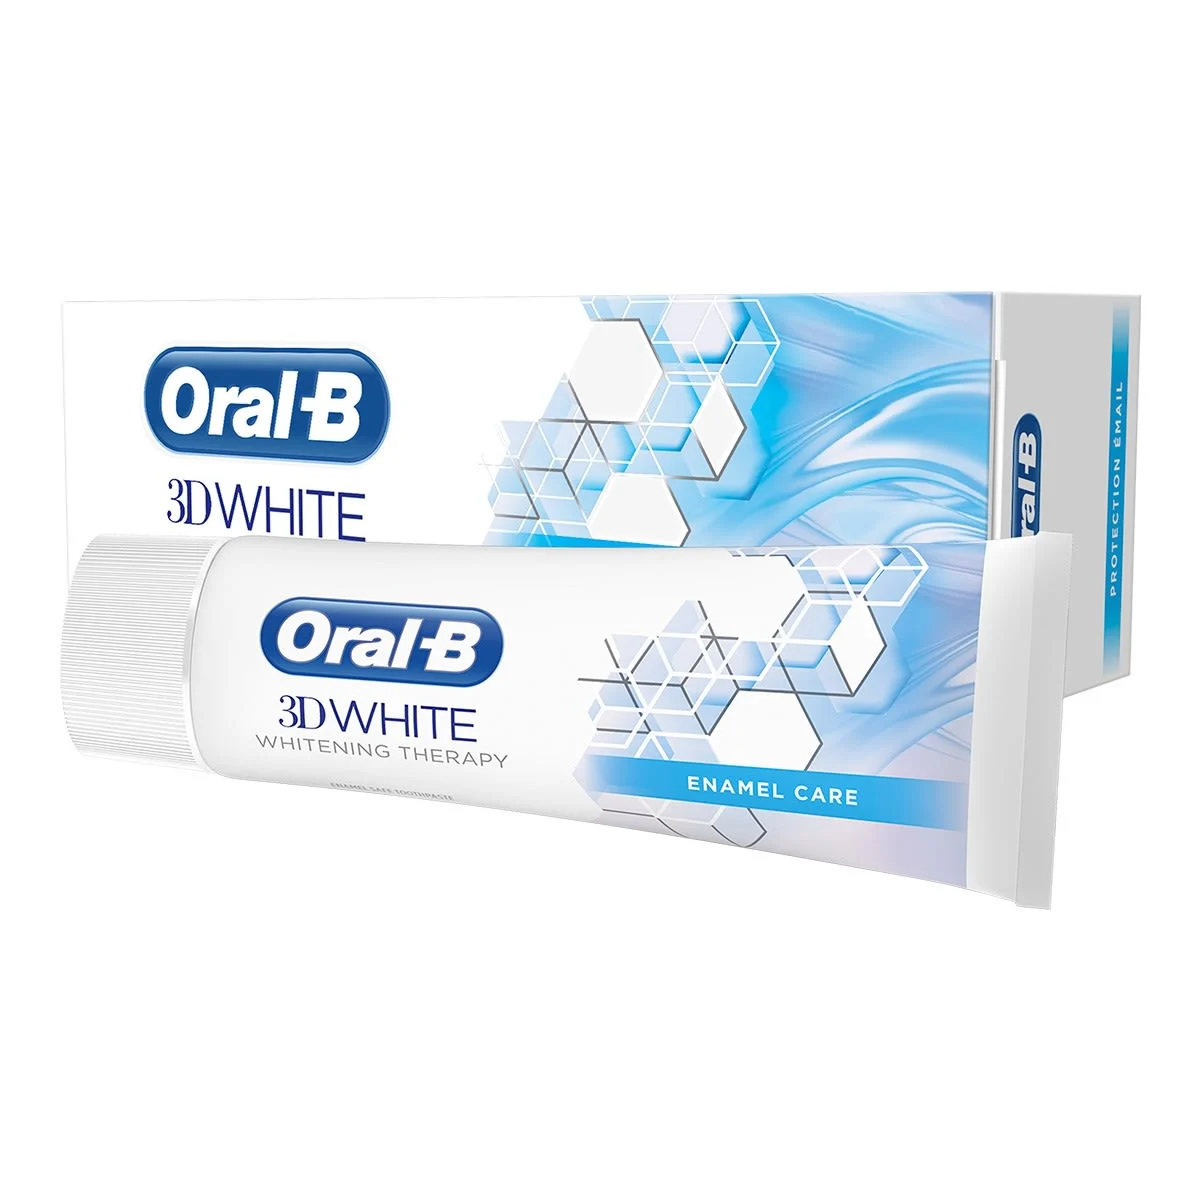 Oral-B 3D White Whitening Therapy Tandkräm 75 ml, Enamel Care 